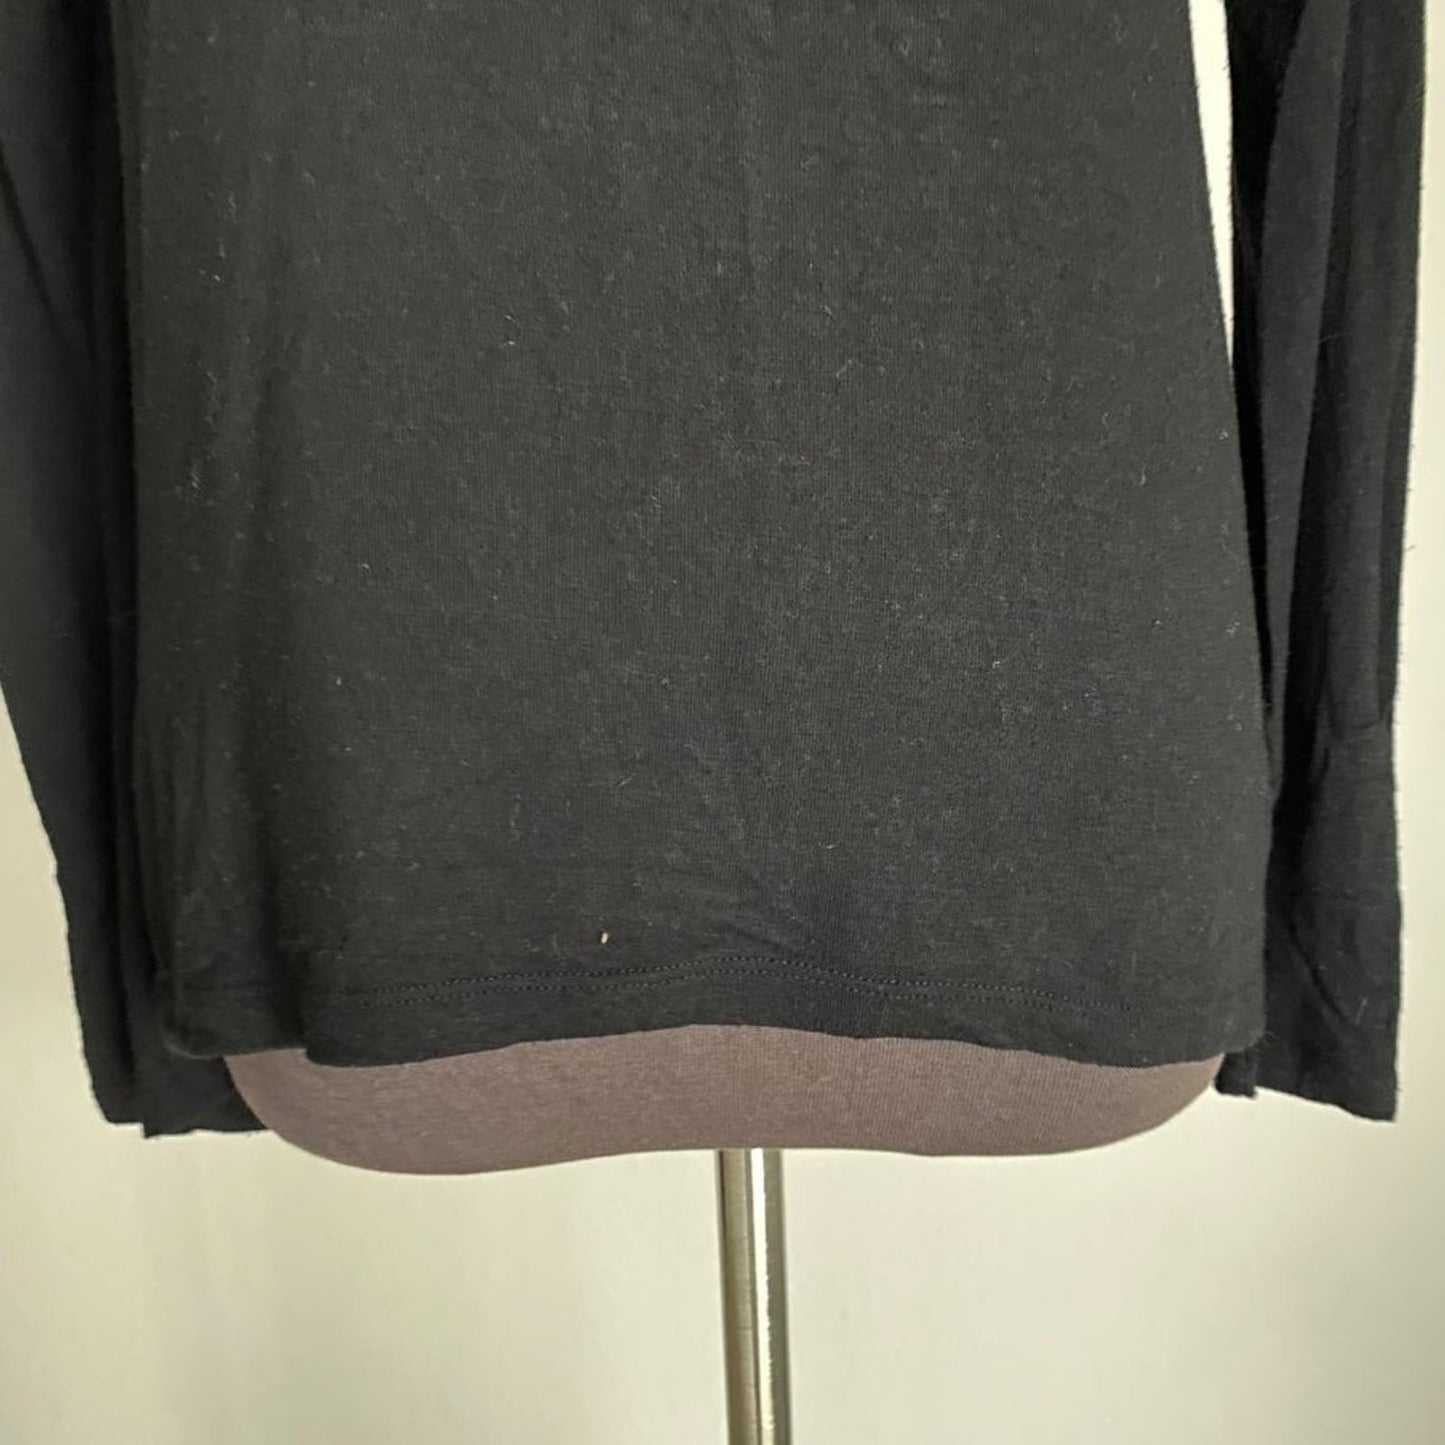 Express sz XS black comfy boho high low knit top shirt